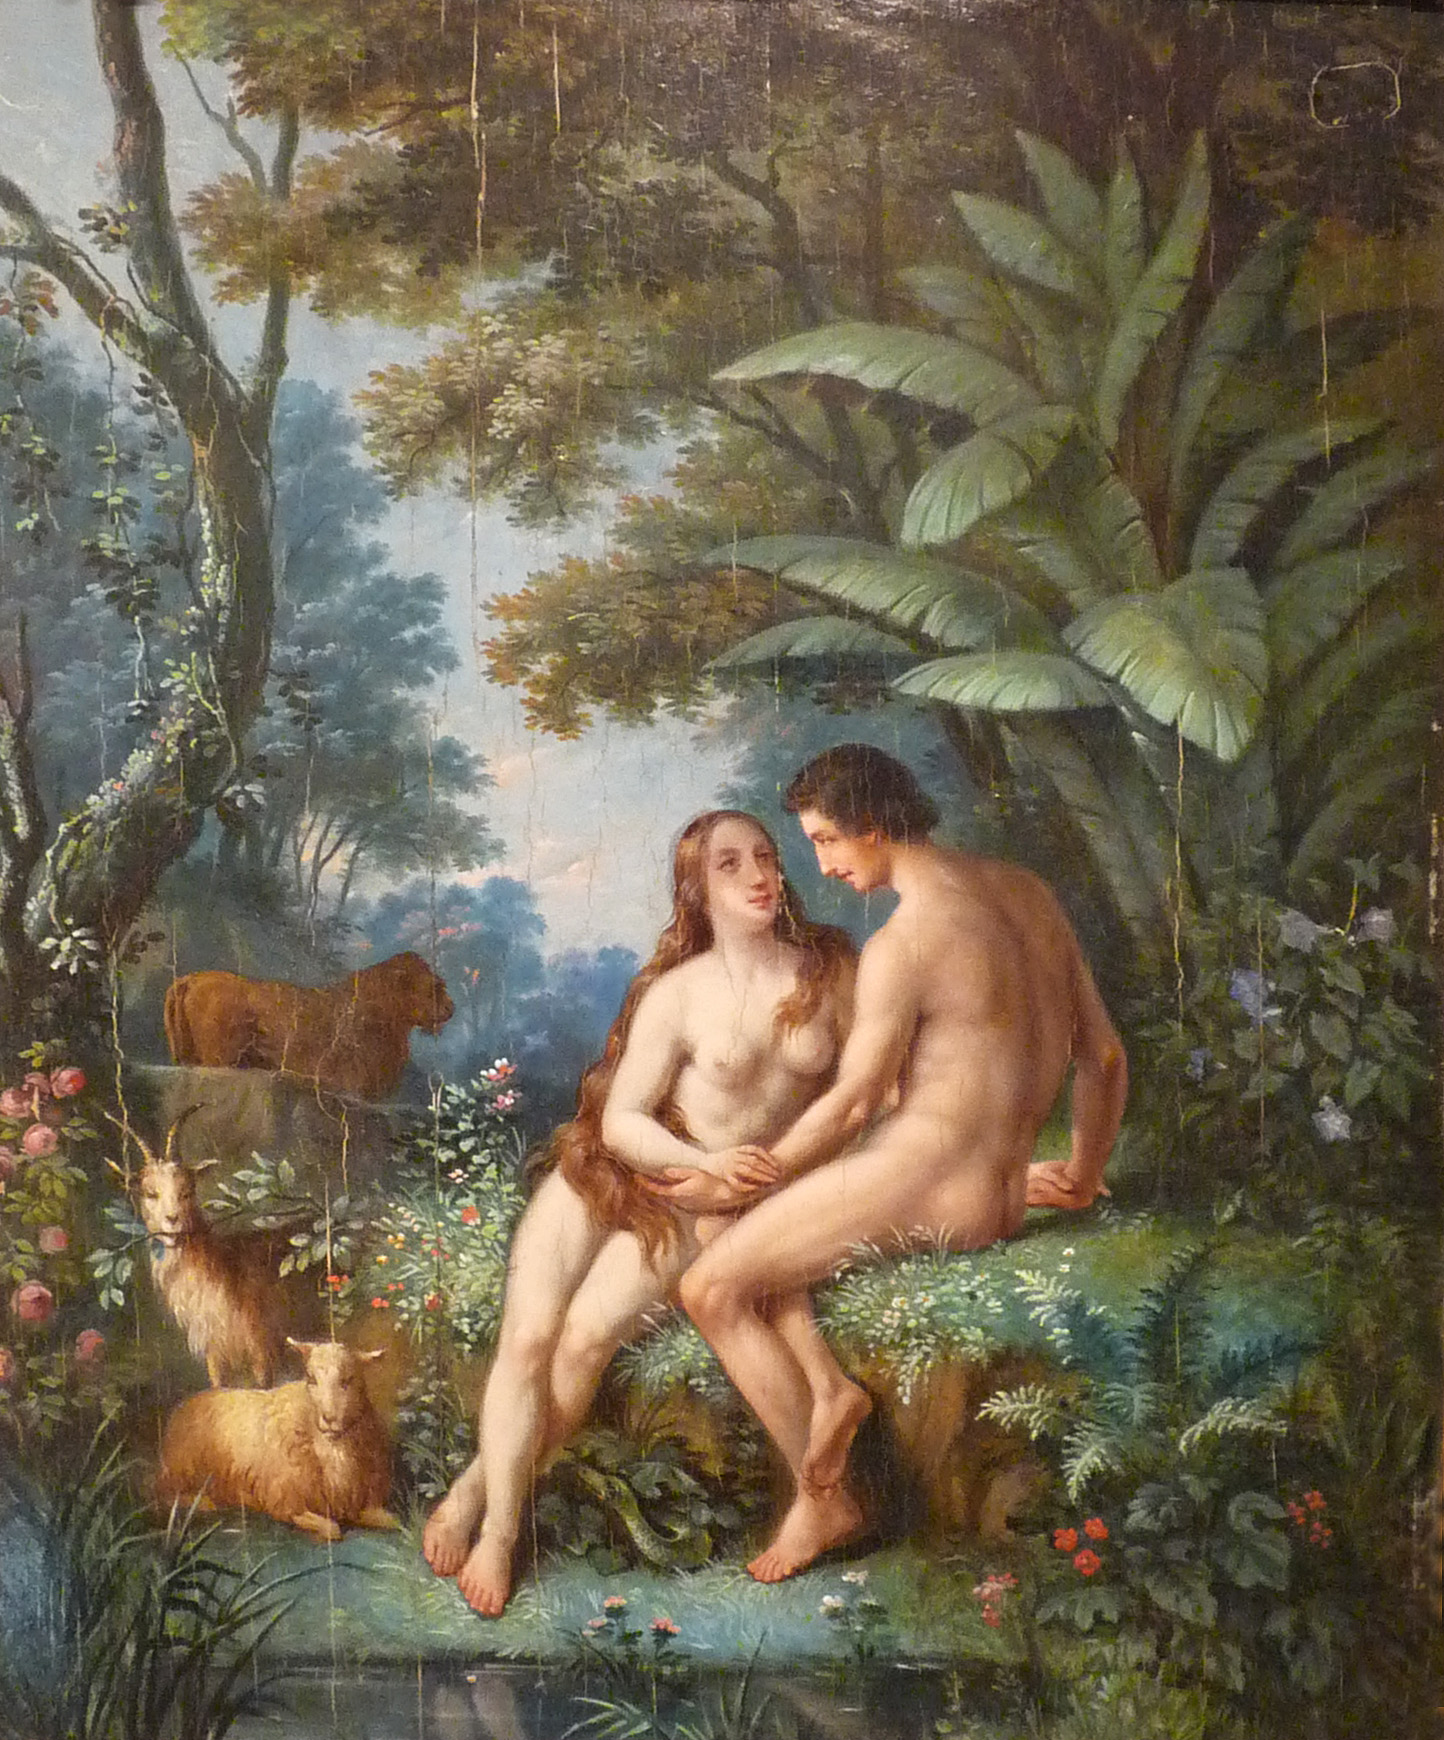 Le mythe du jardin : Jean-Joseph - Thorelle - Adam et Eve au paradis terrestre